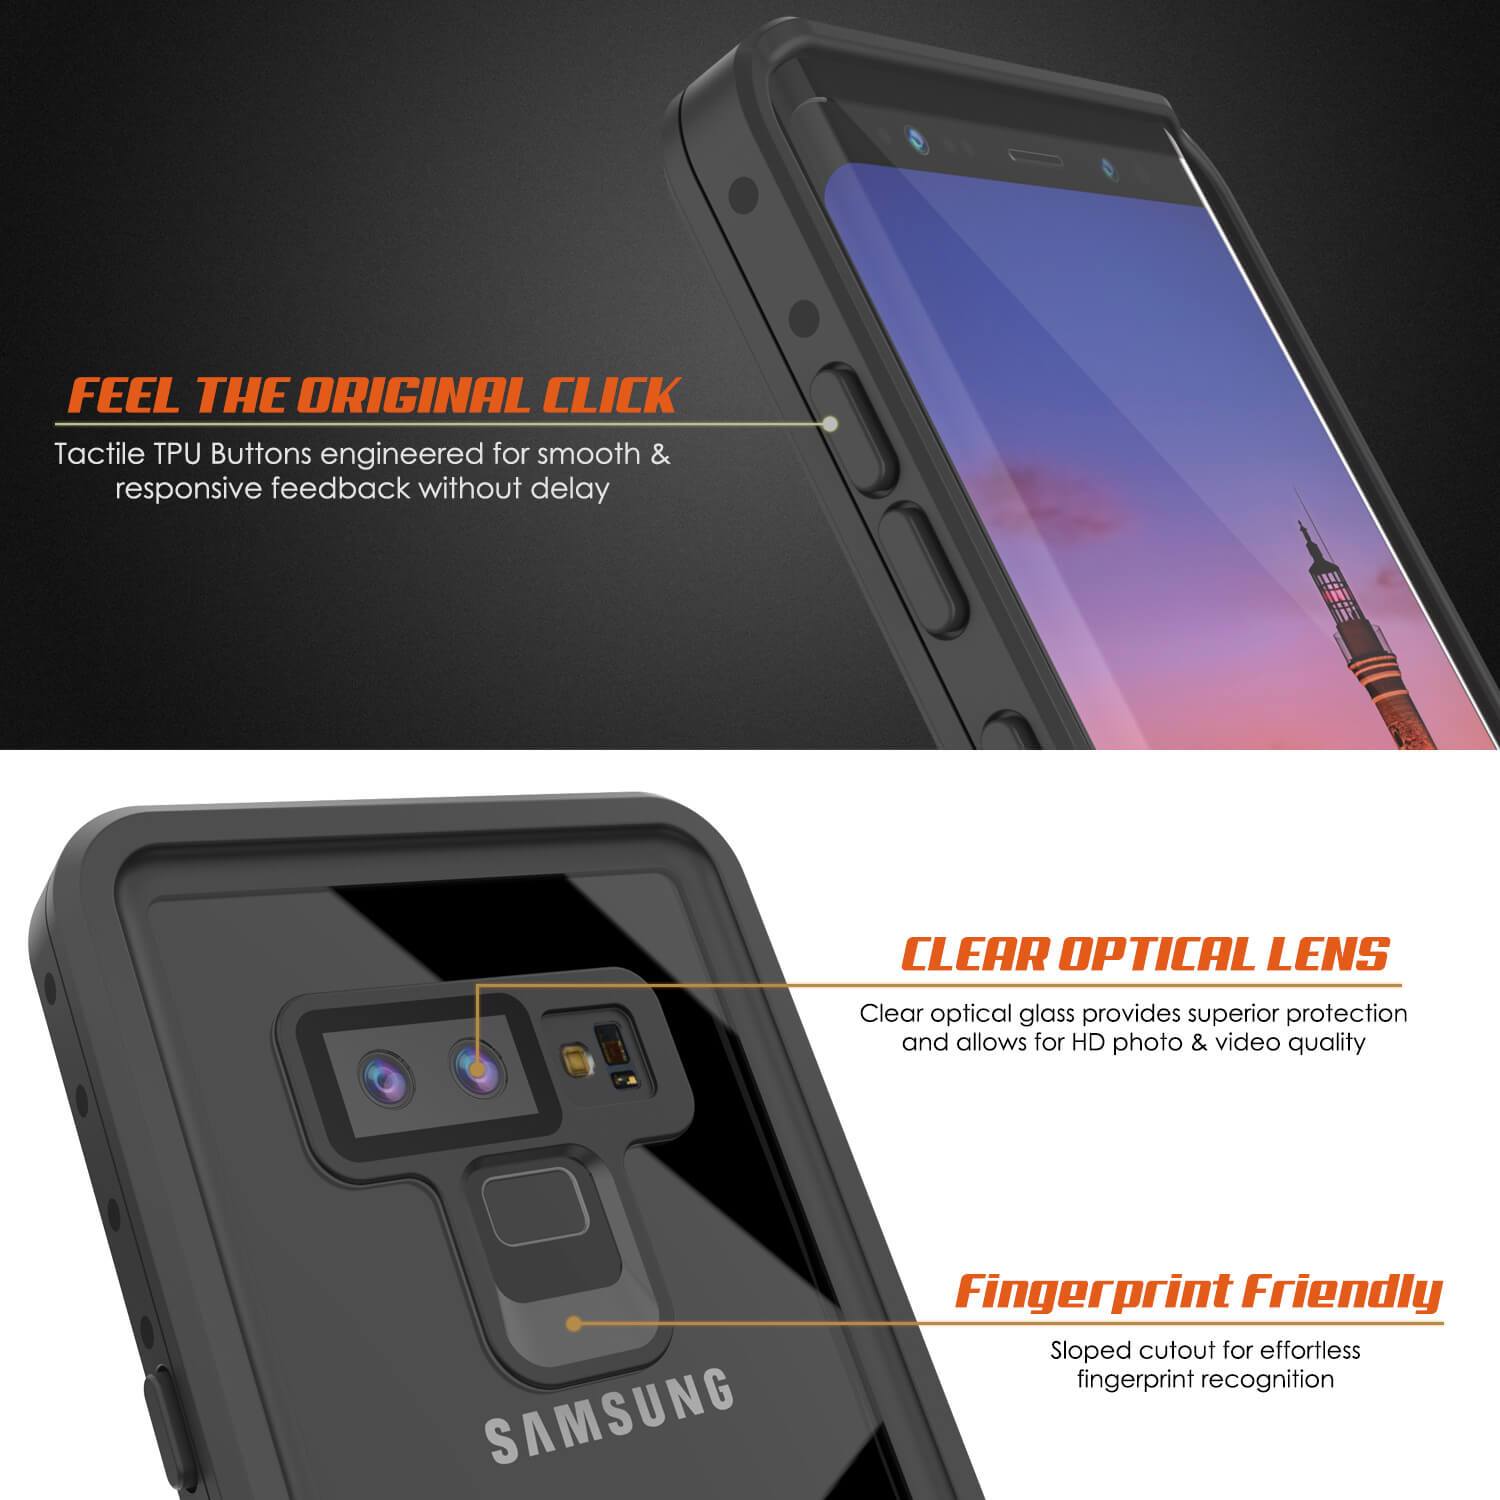 Galaxy Note 9 Waterproof Case Punkсase StudStar Clear Thin 6.6ft Underwater Shock/Snow Proof